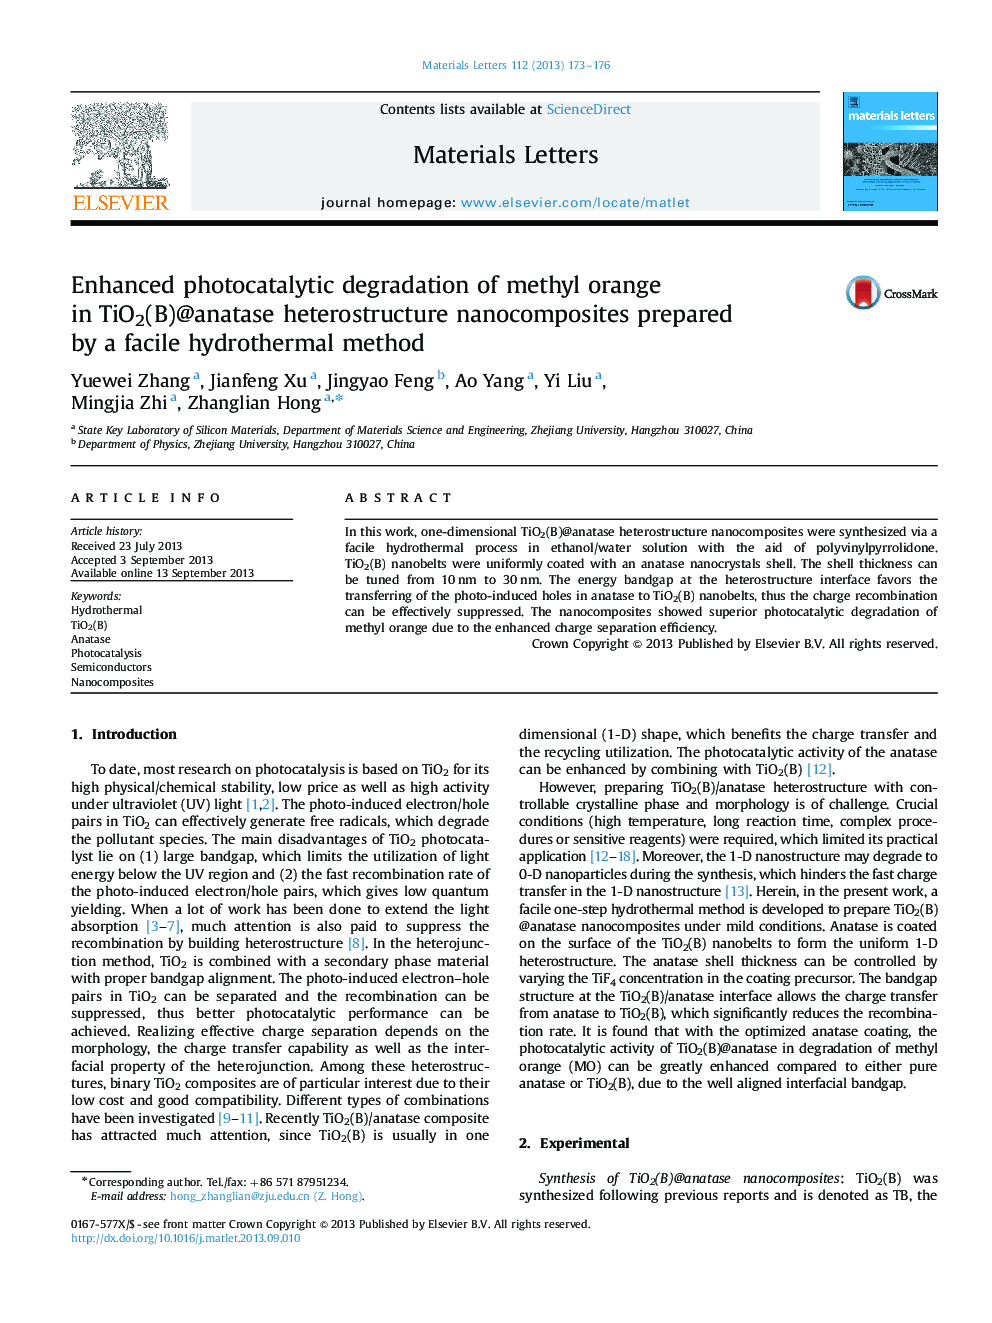 Enhanced photocatalytic degradation of methyl orange in TiO2(B)@anatase heterostructure nanocomposites prepared by a facile hydrothermal method